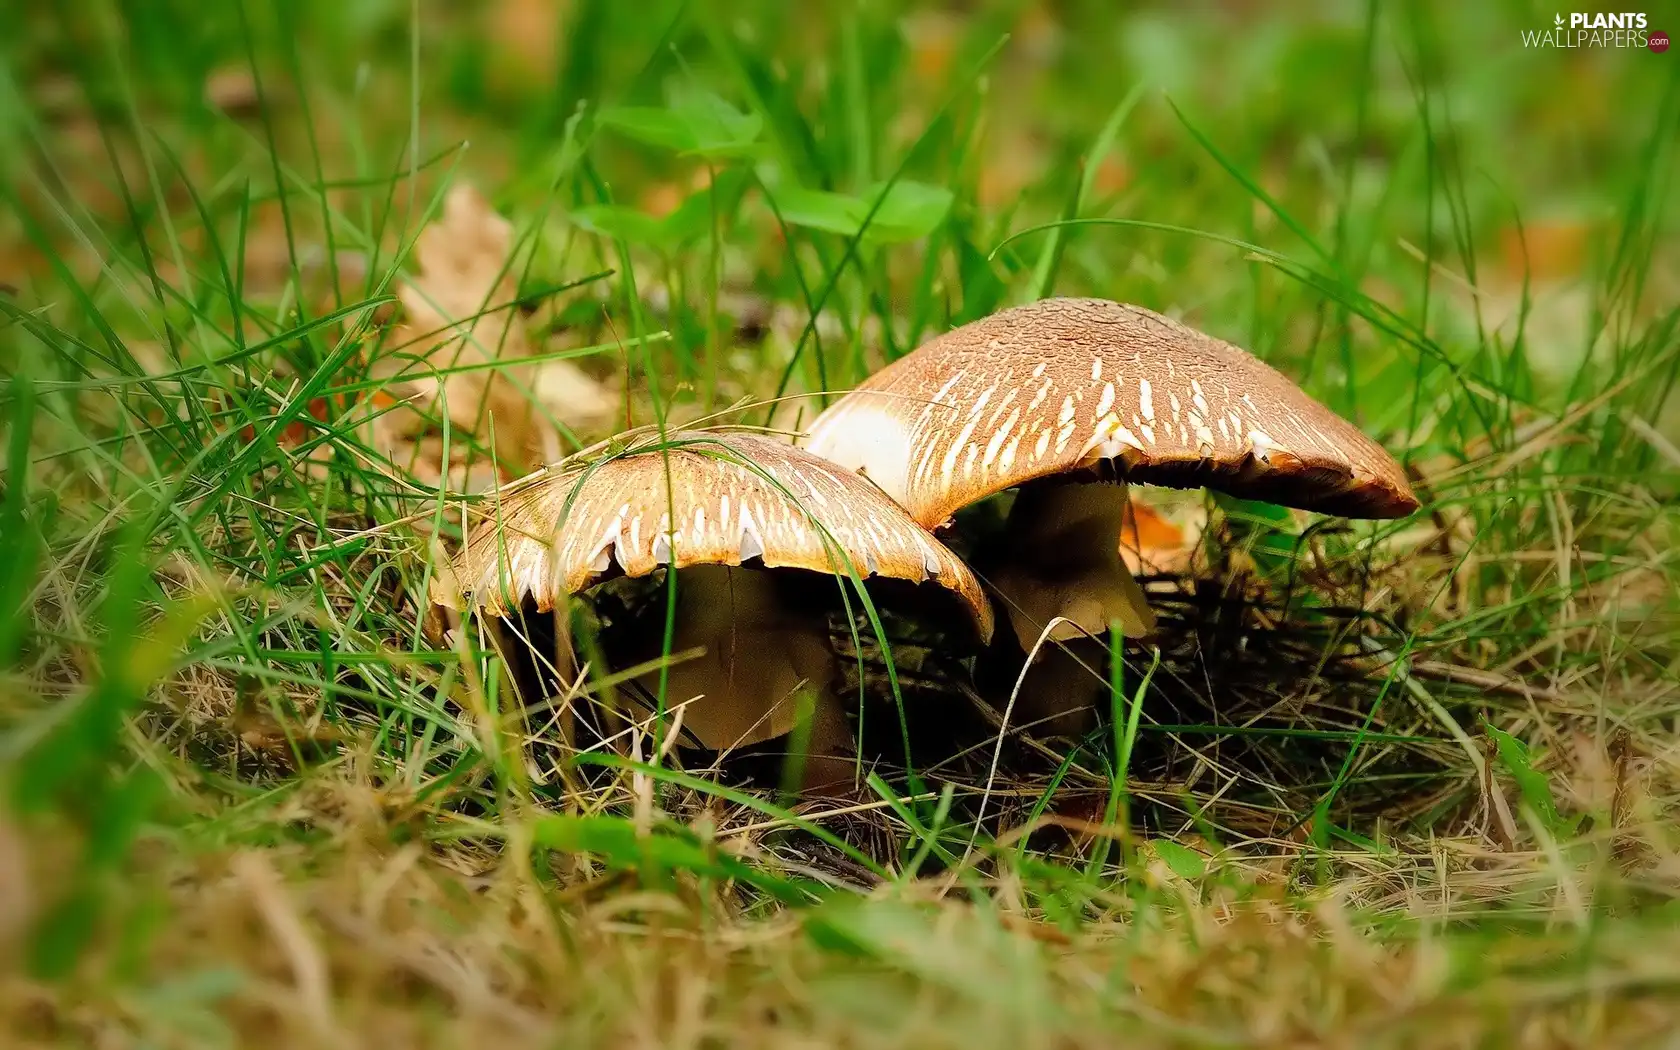 Leaf, mushrooms, grass